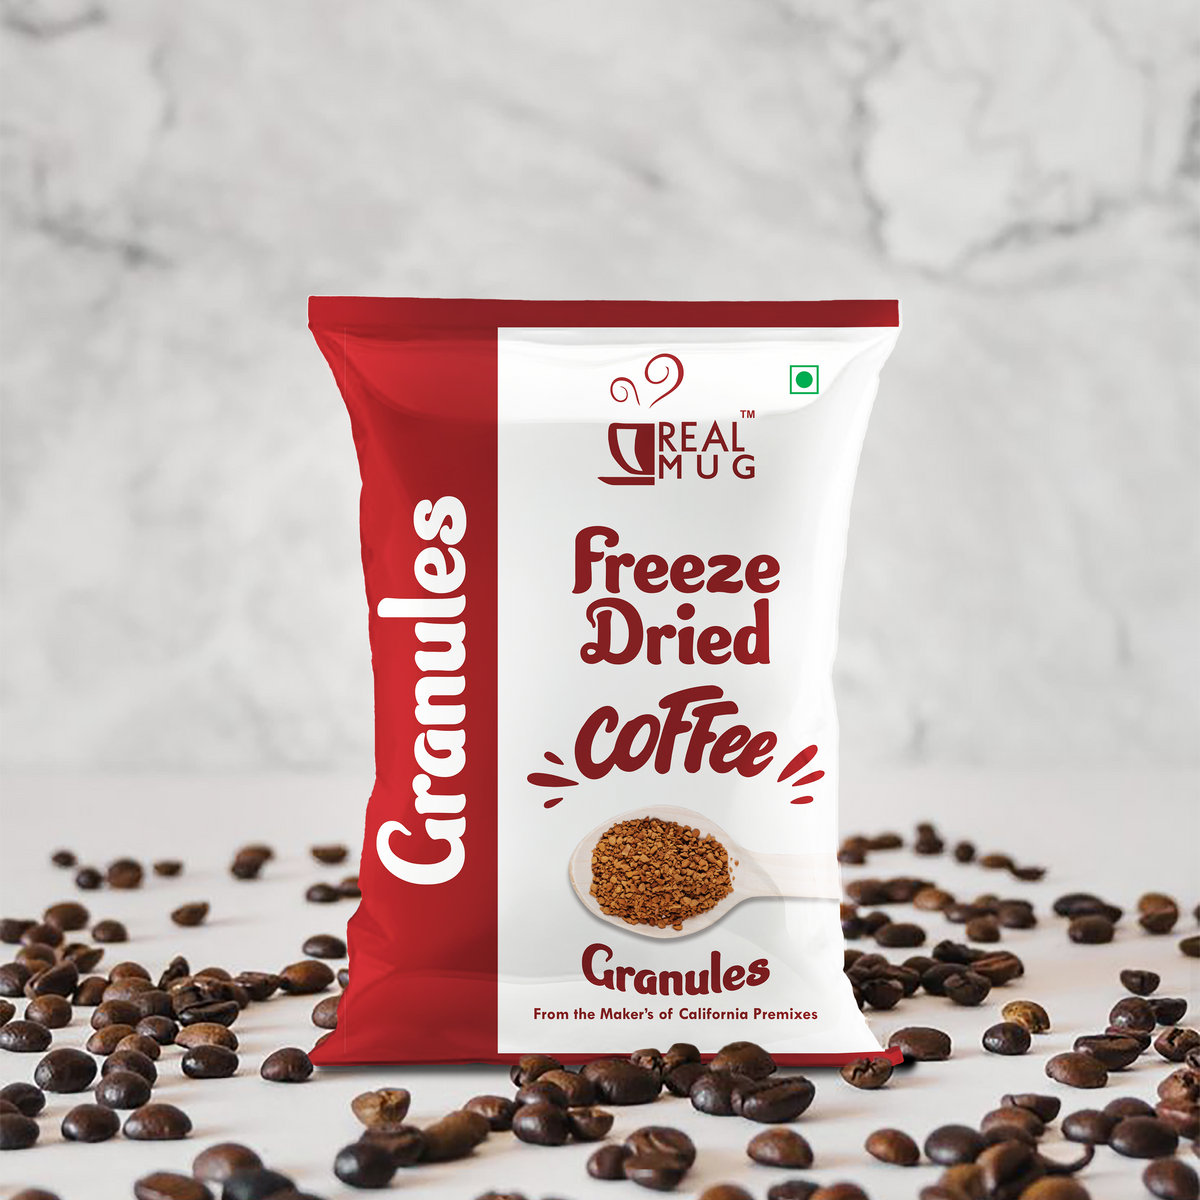 Freeze dried Coffee granules